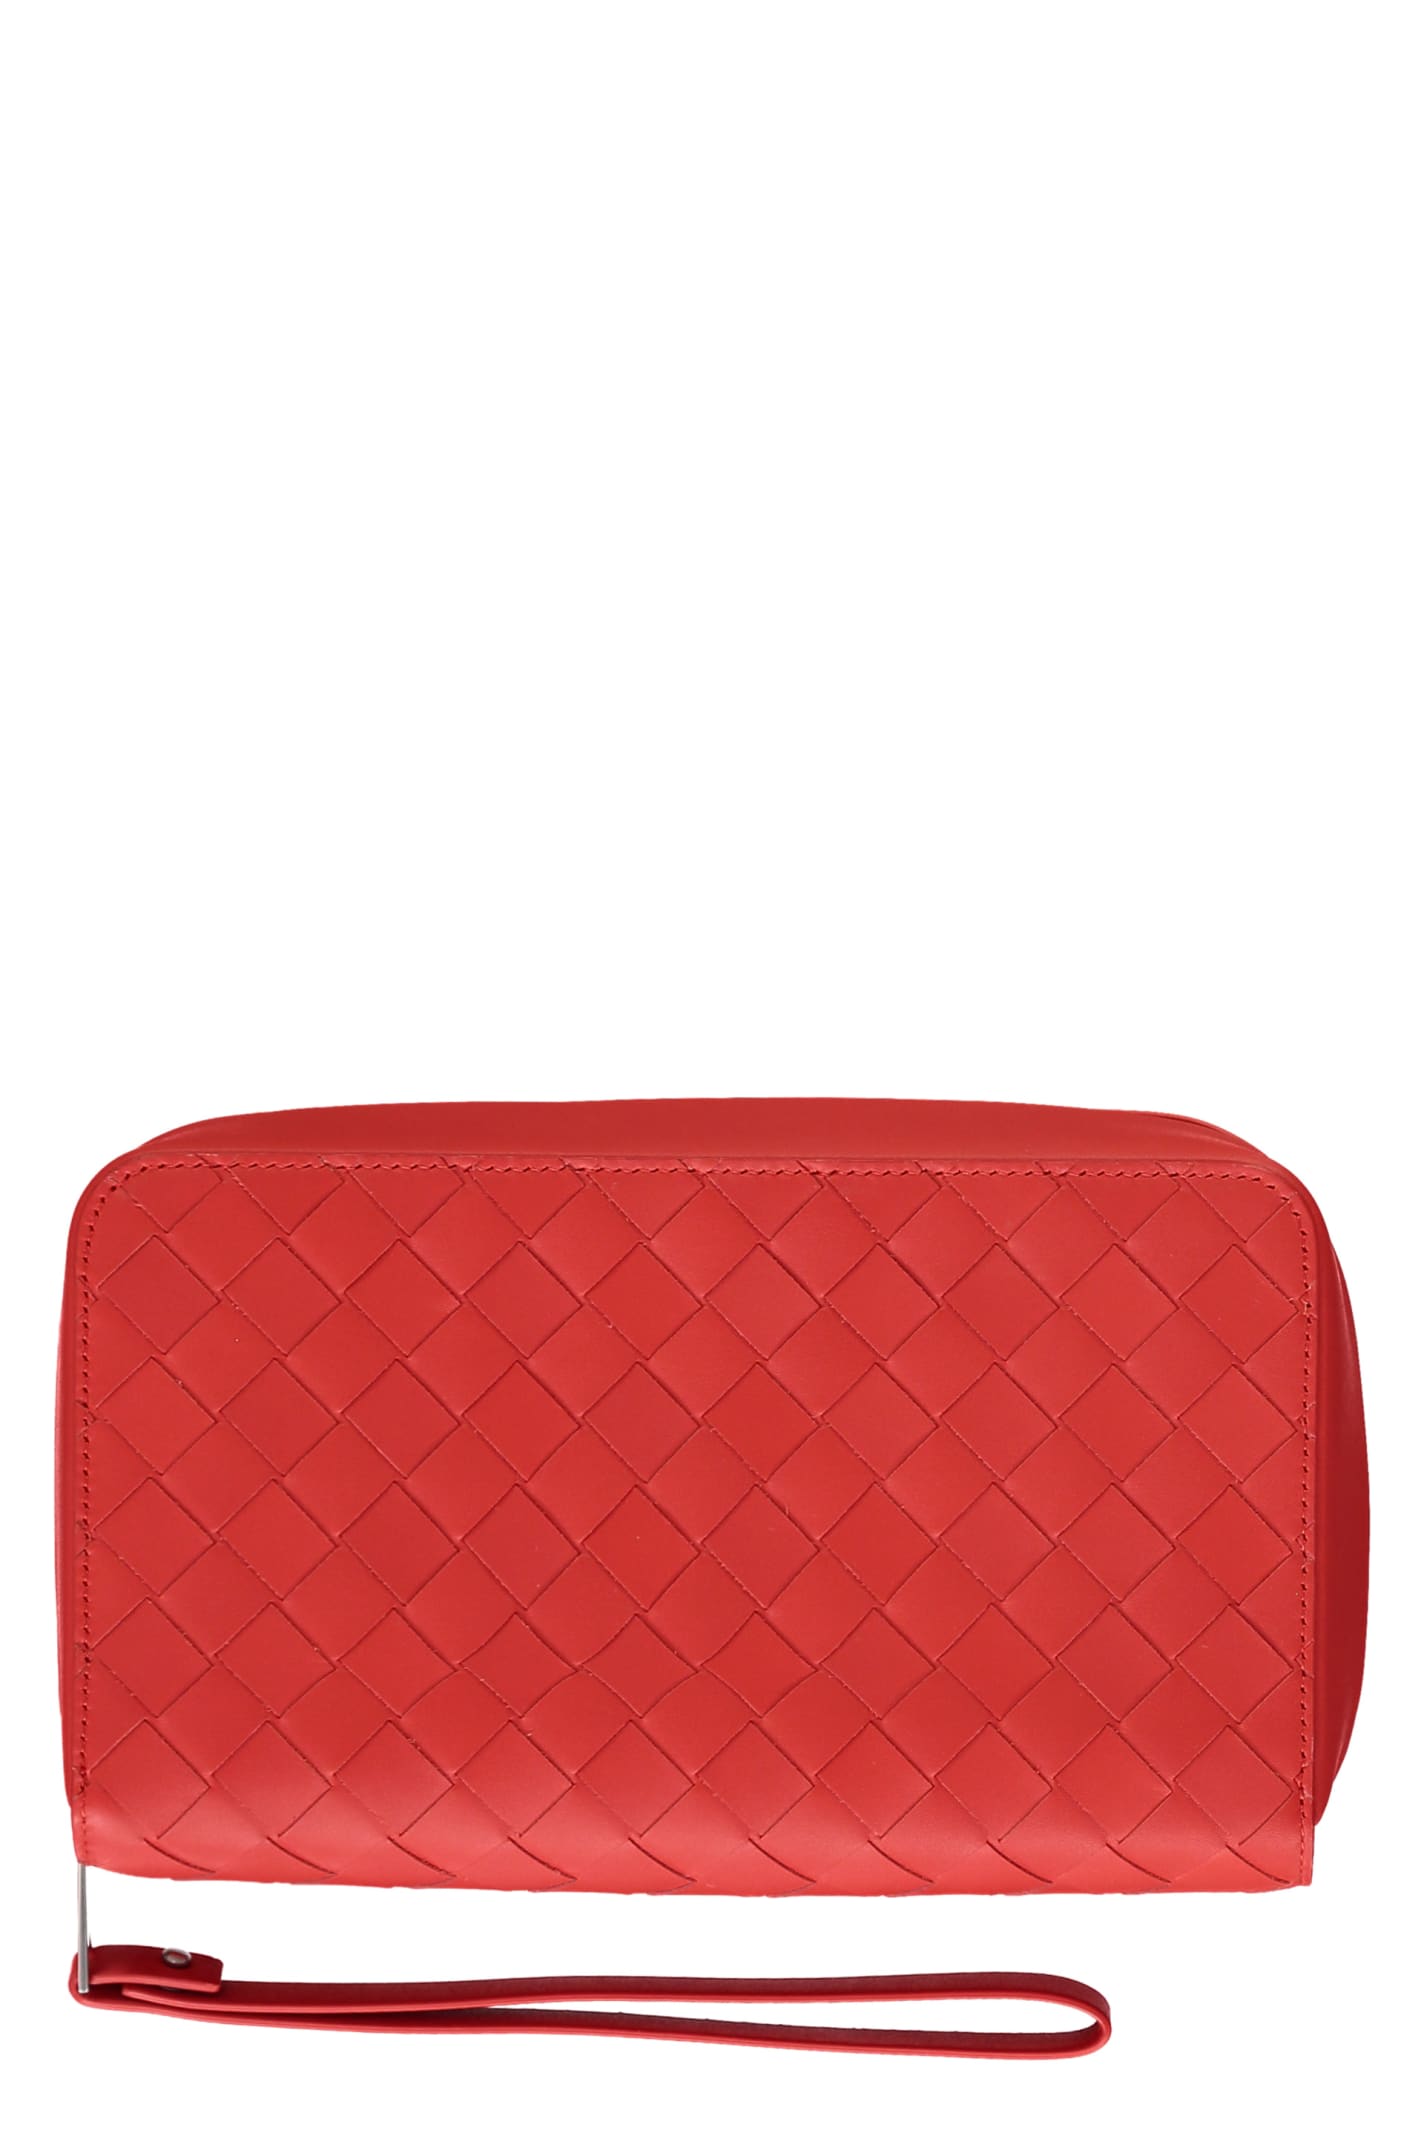 Bottega Veneta Leather Zip-around Wallet In Red